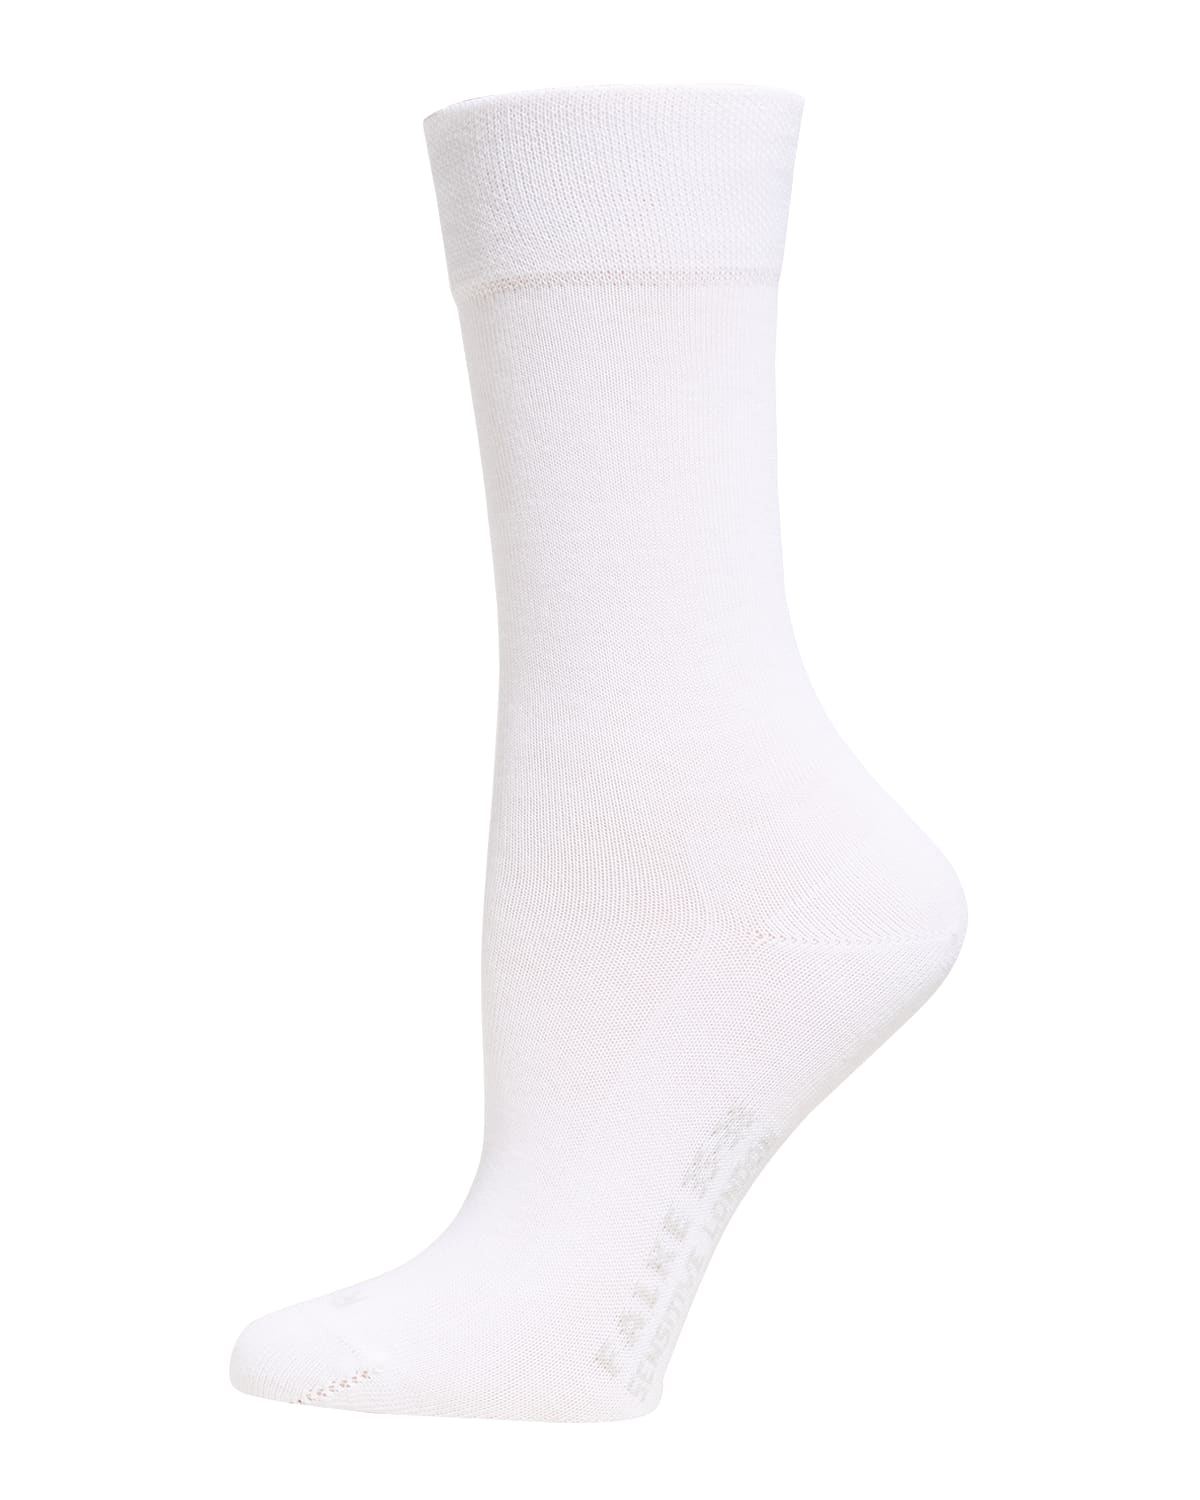 Falke London Ankle Socks In White